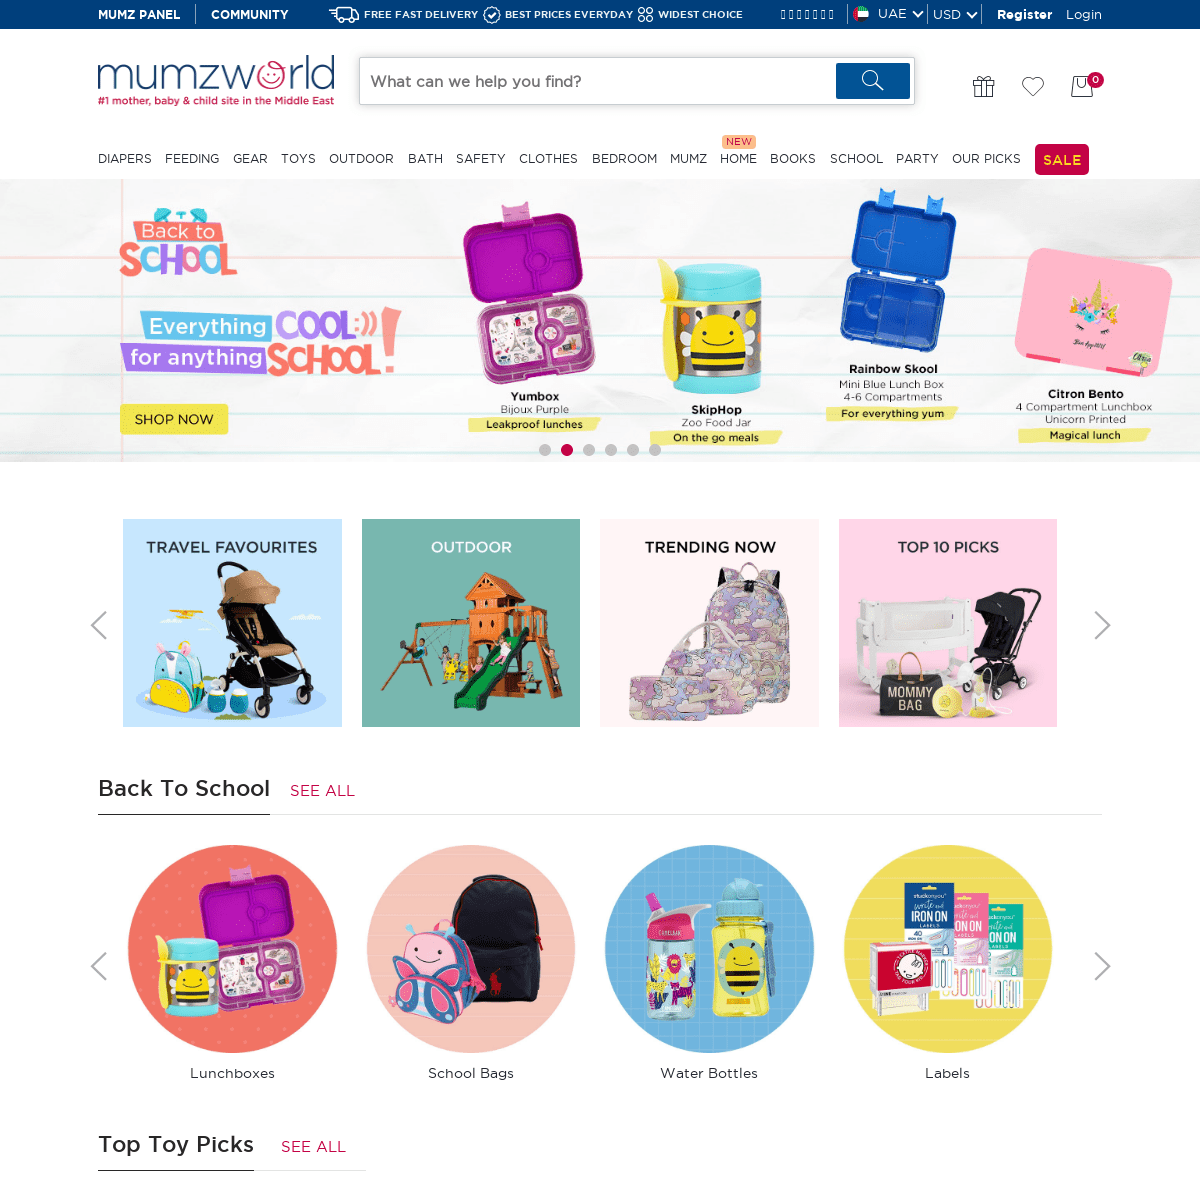 A complete backup of mumzworld.com